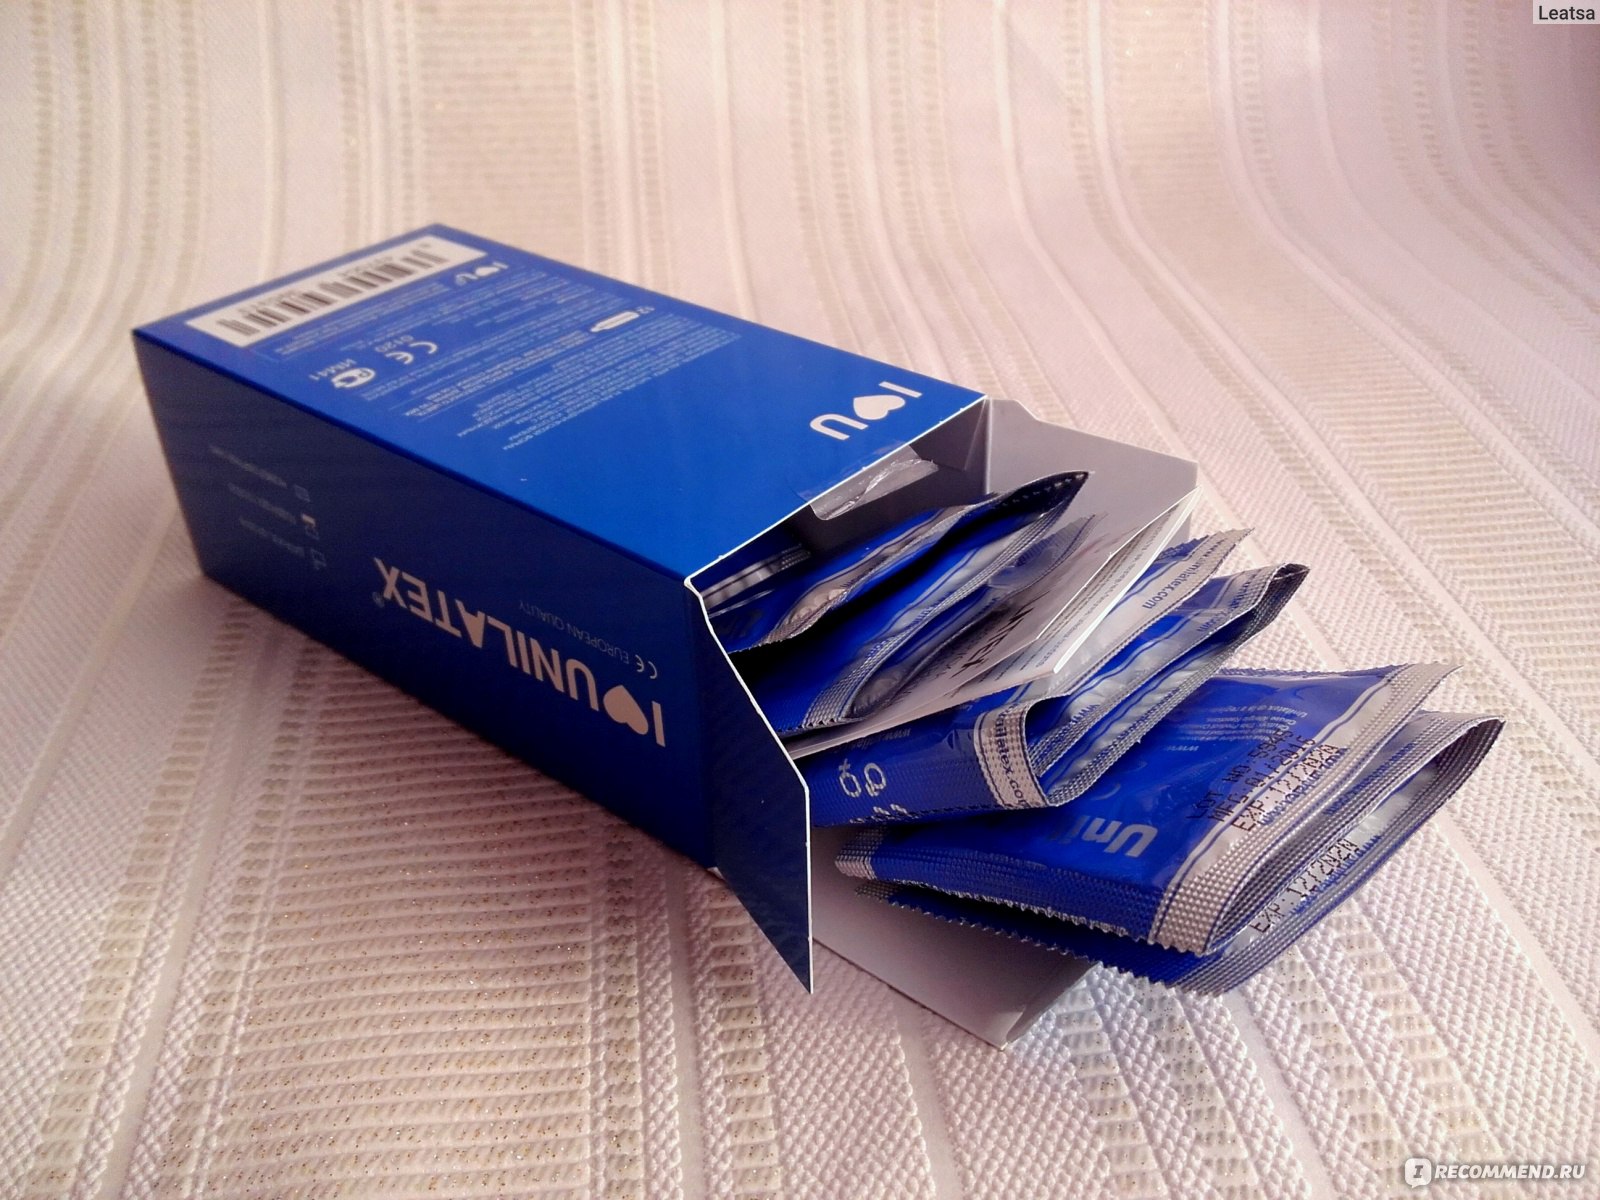 Презервативы в синей коробке